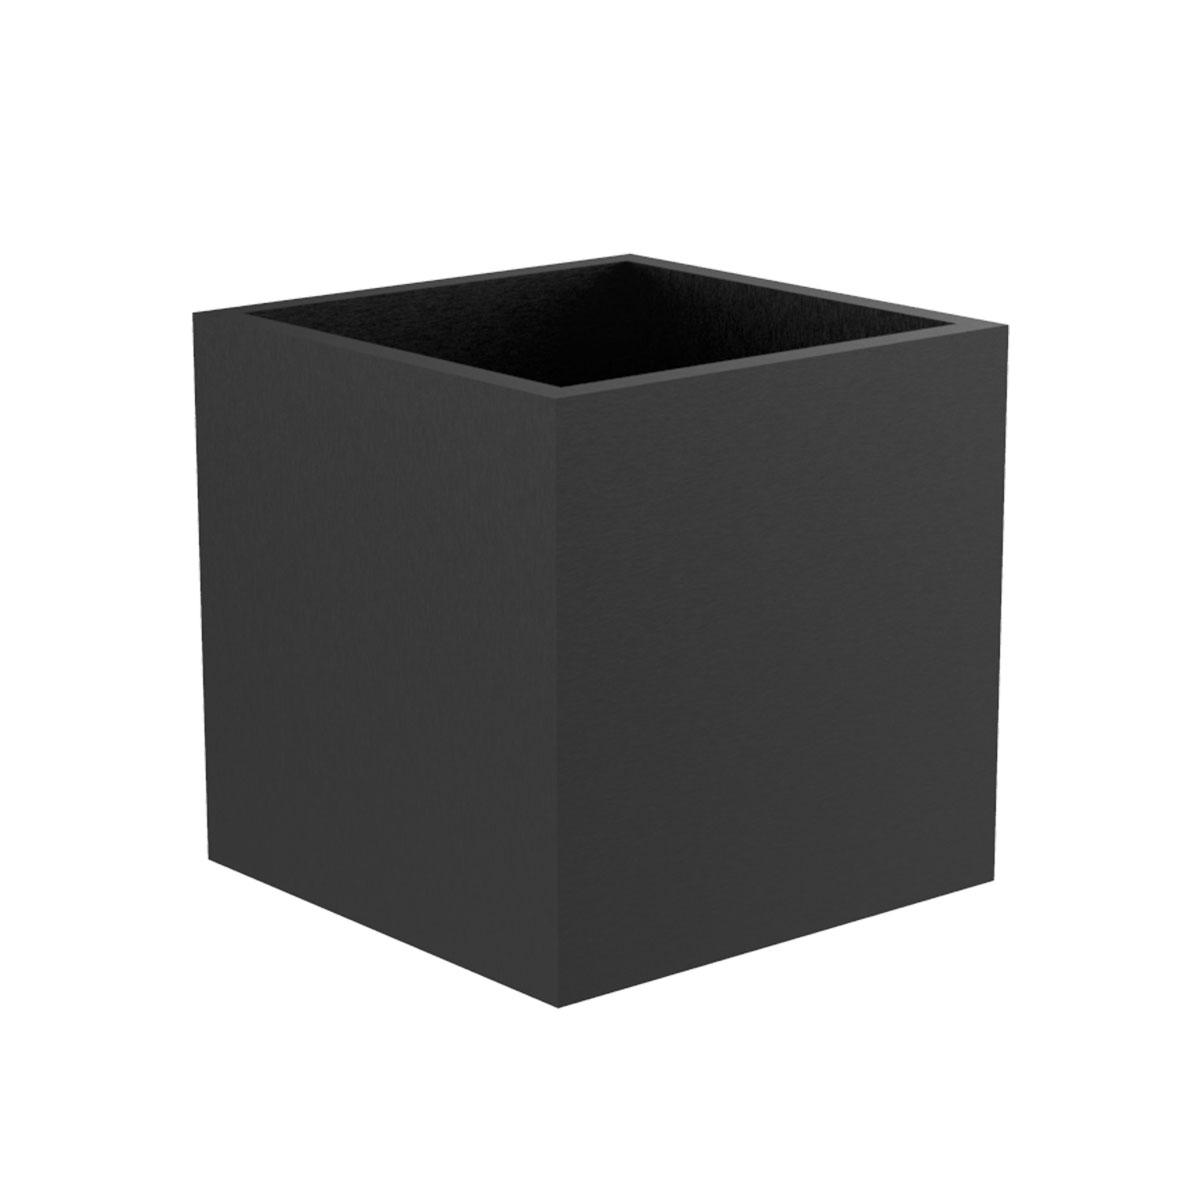 Selected image for SIGOC Žardinjera Cube XS